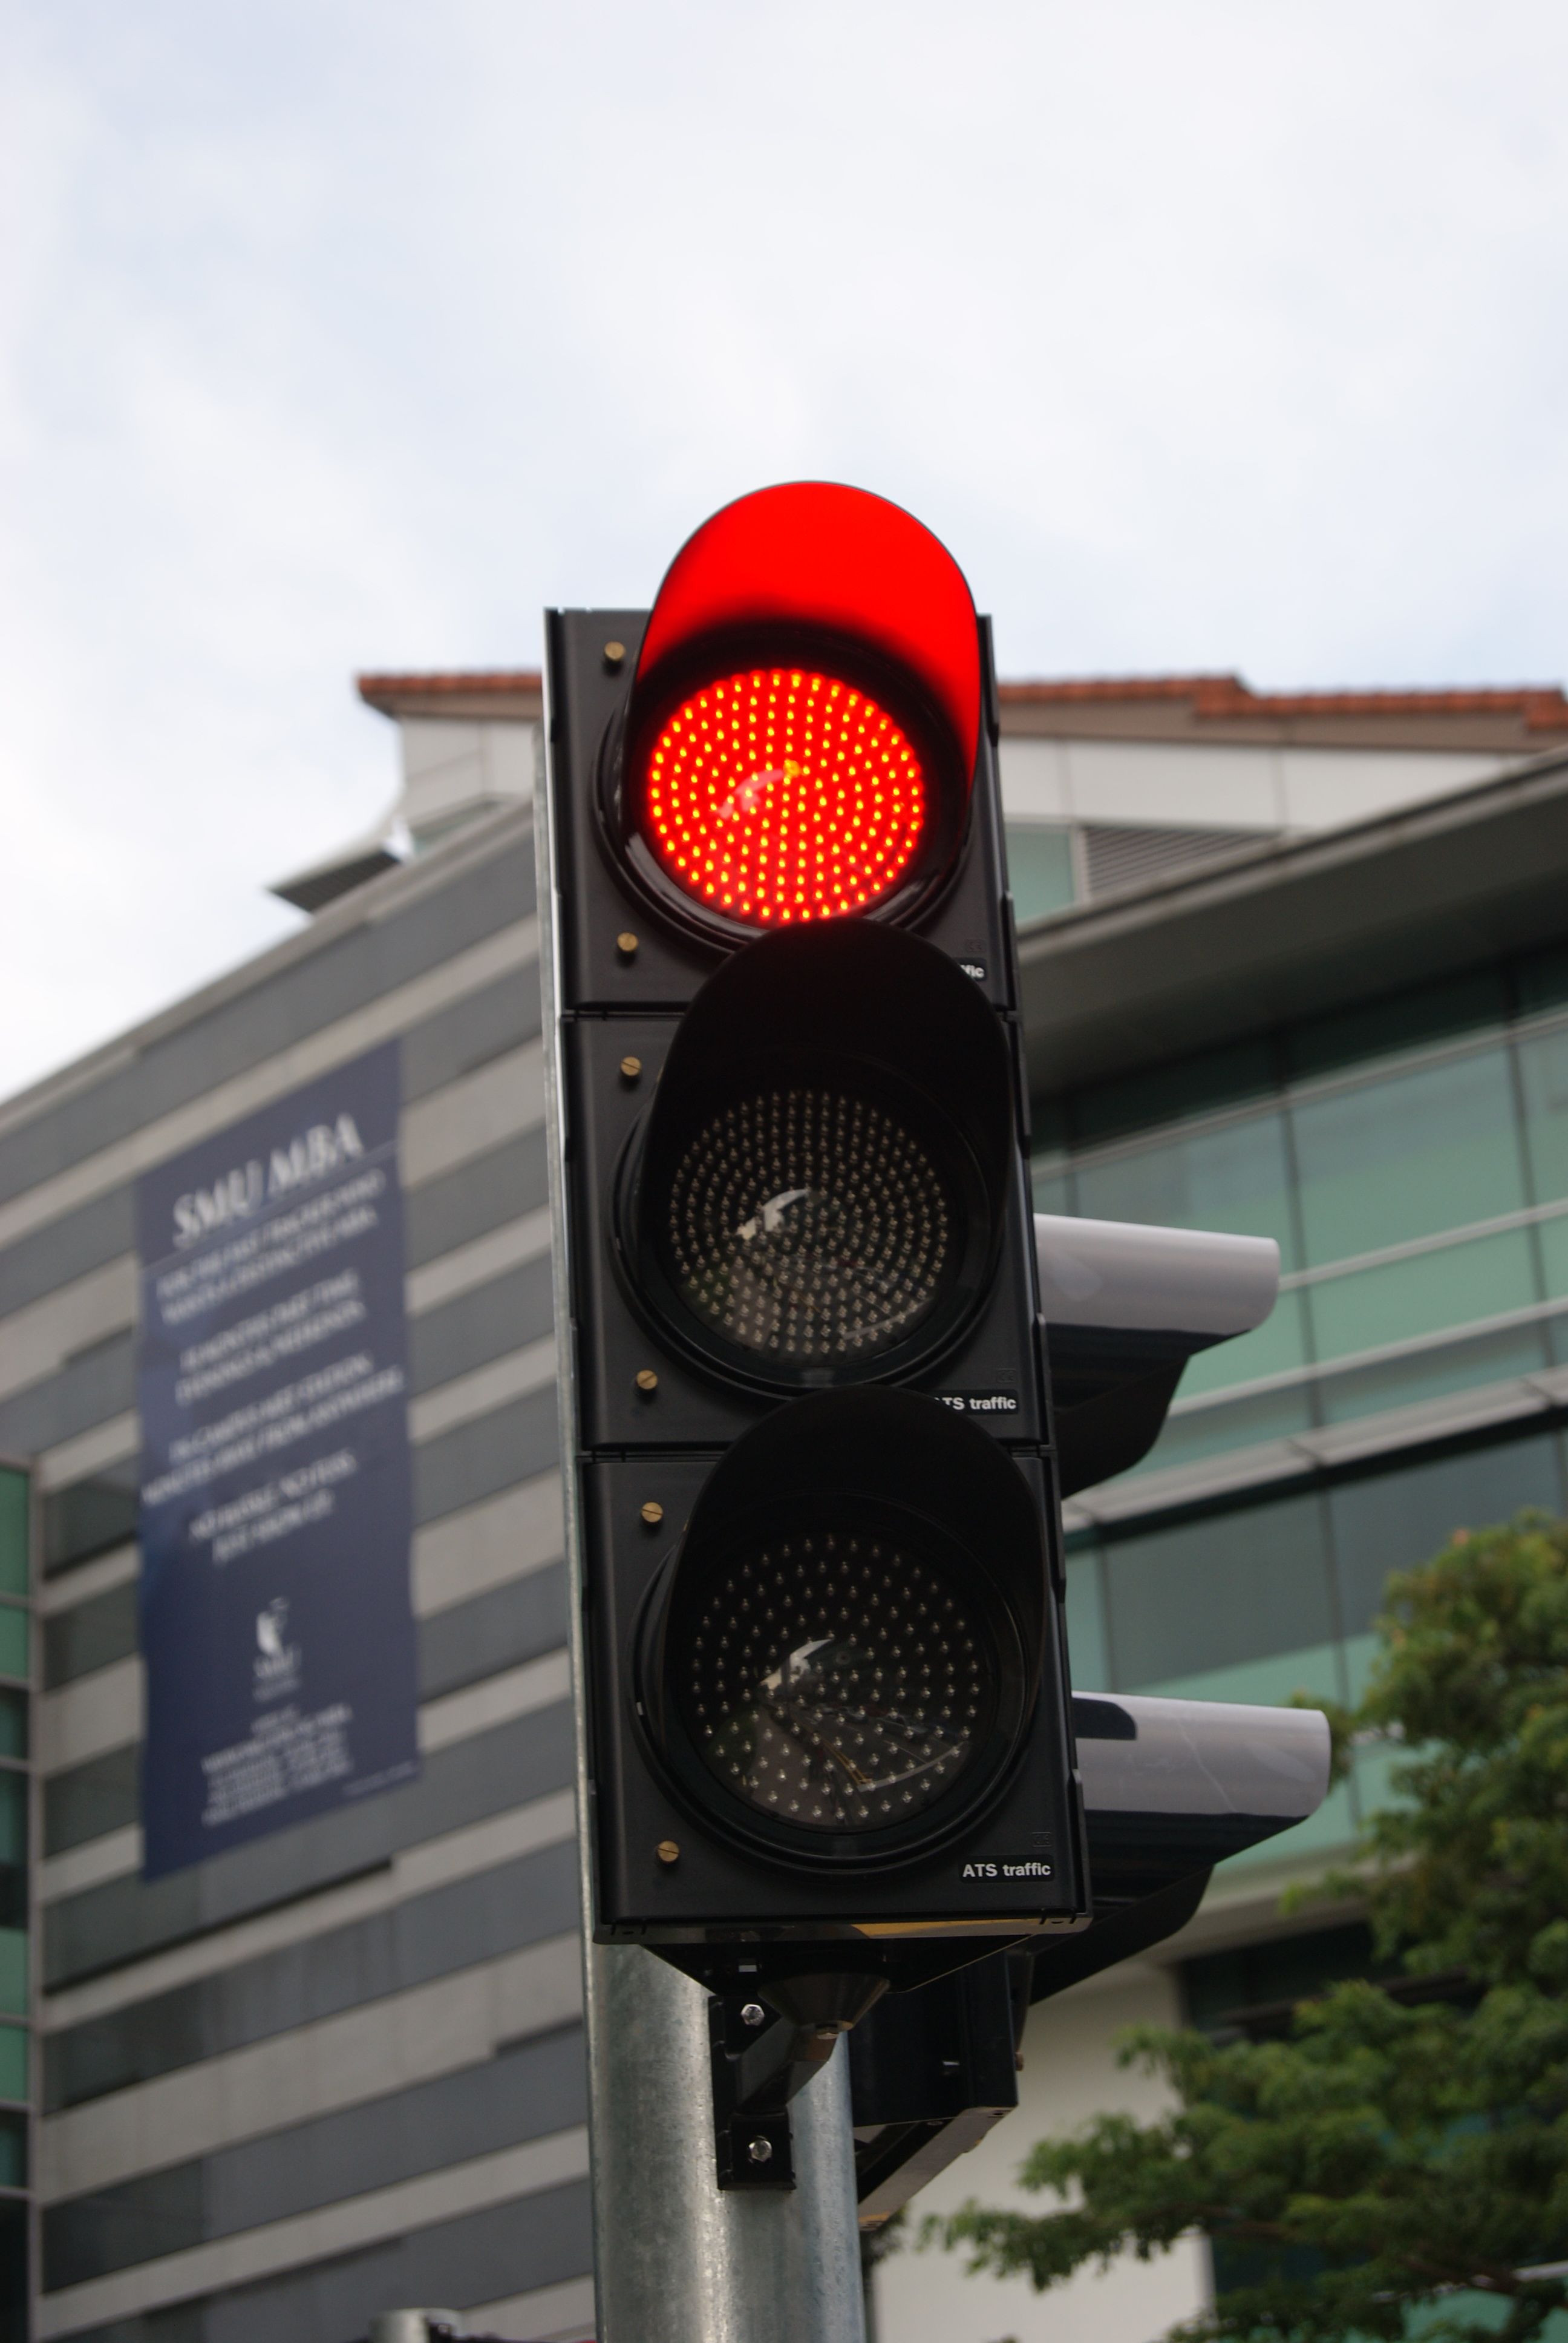 File:Red traffic signal, Stamford Road, Singapore - 20111210-02.jpg ...